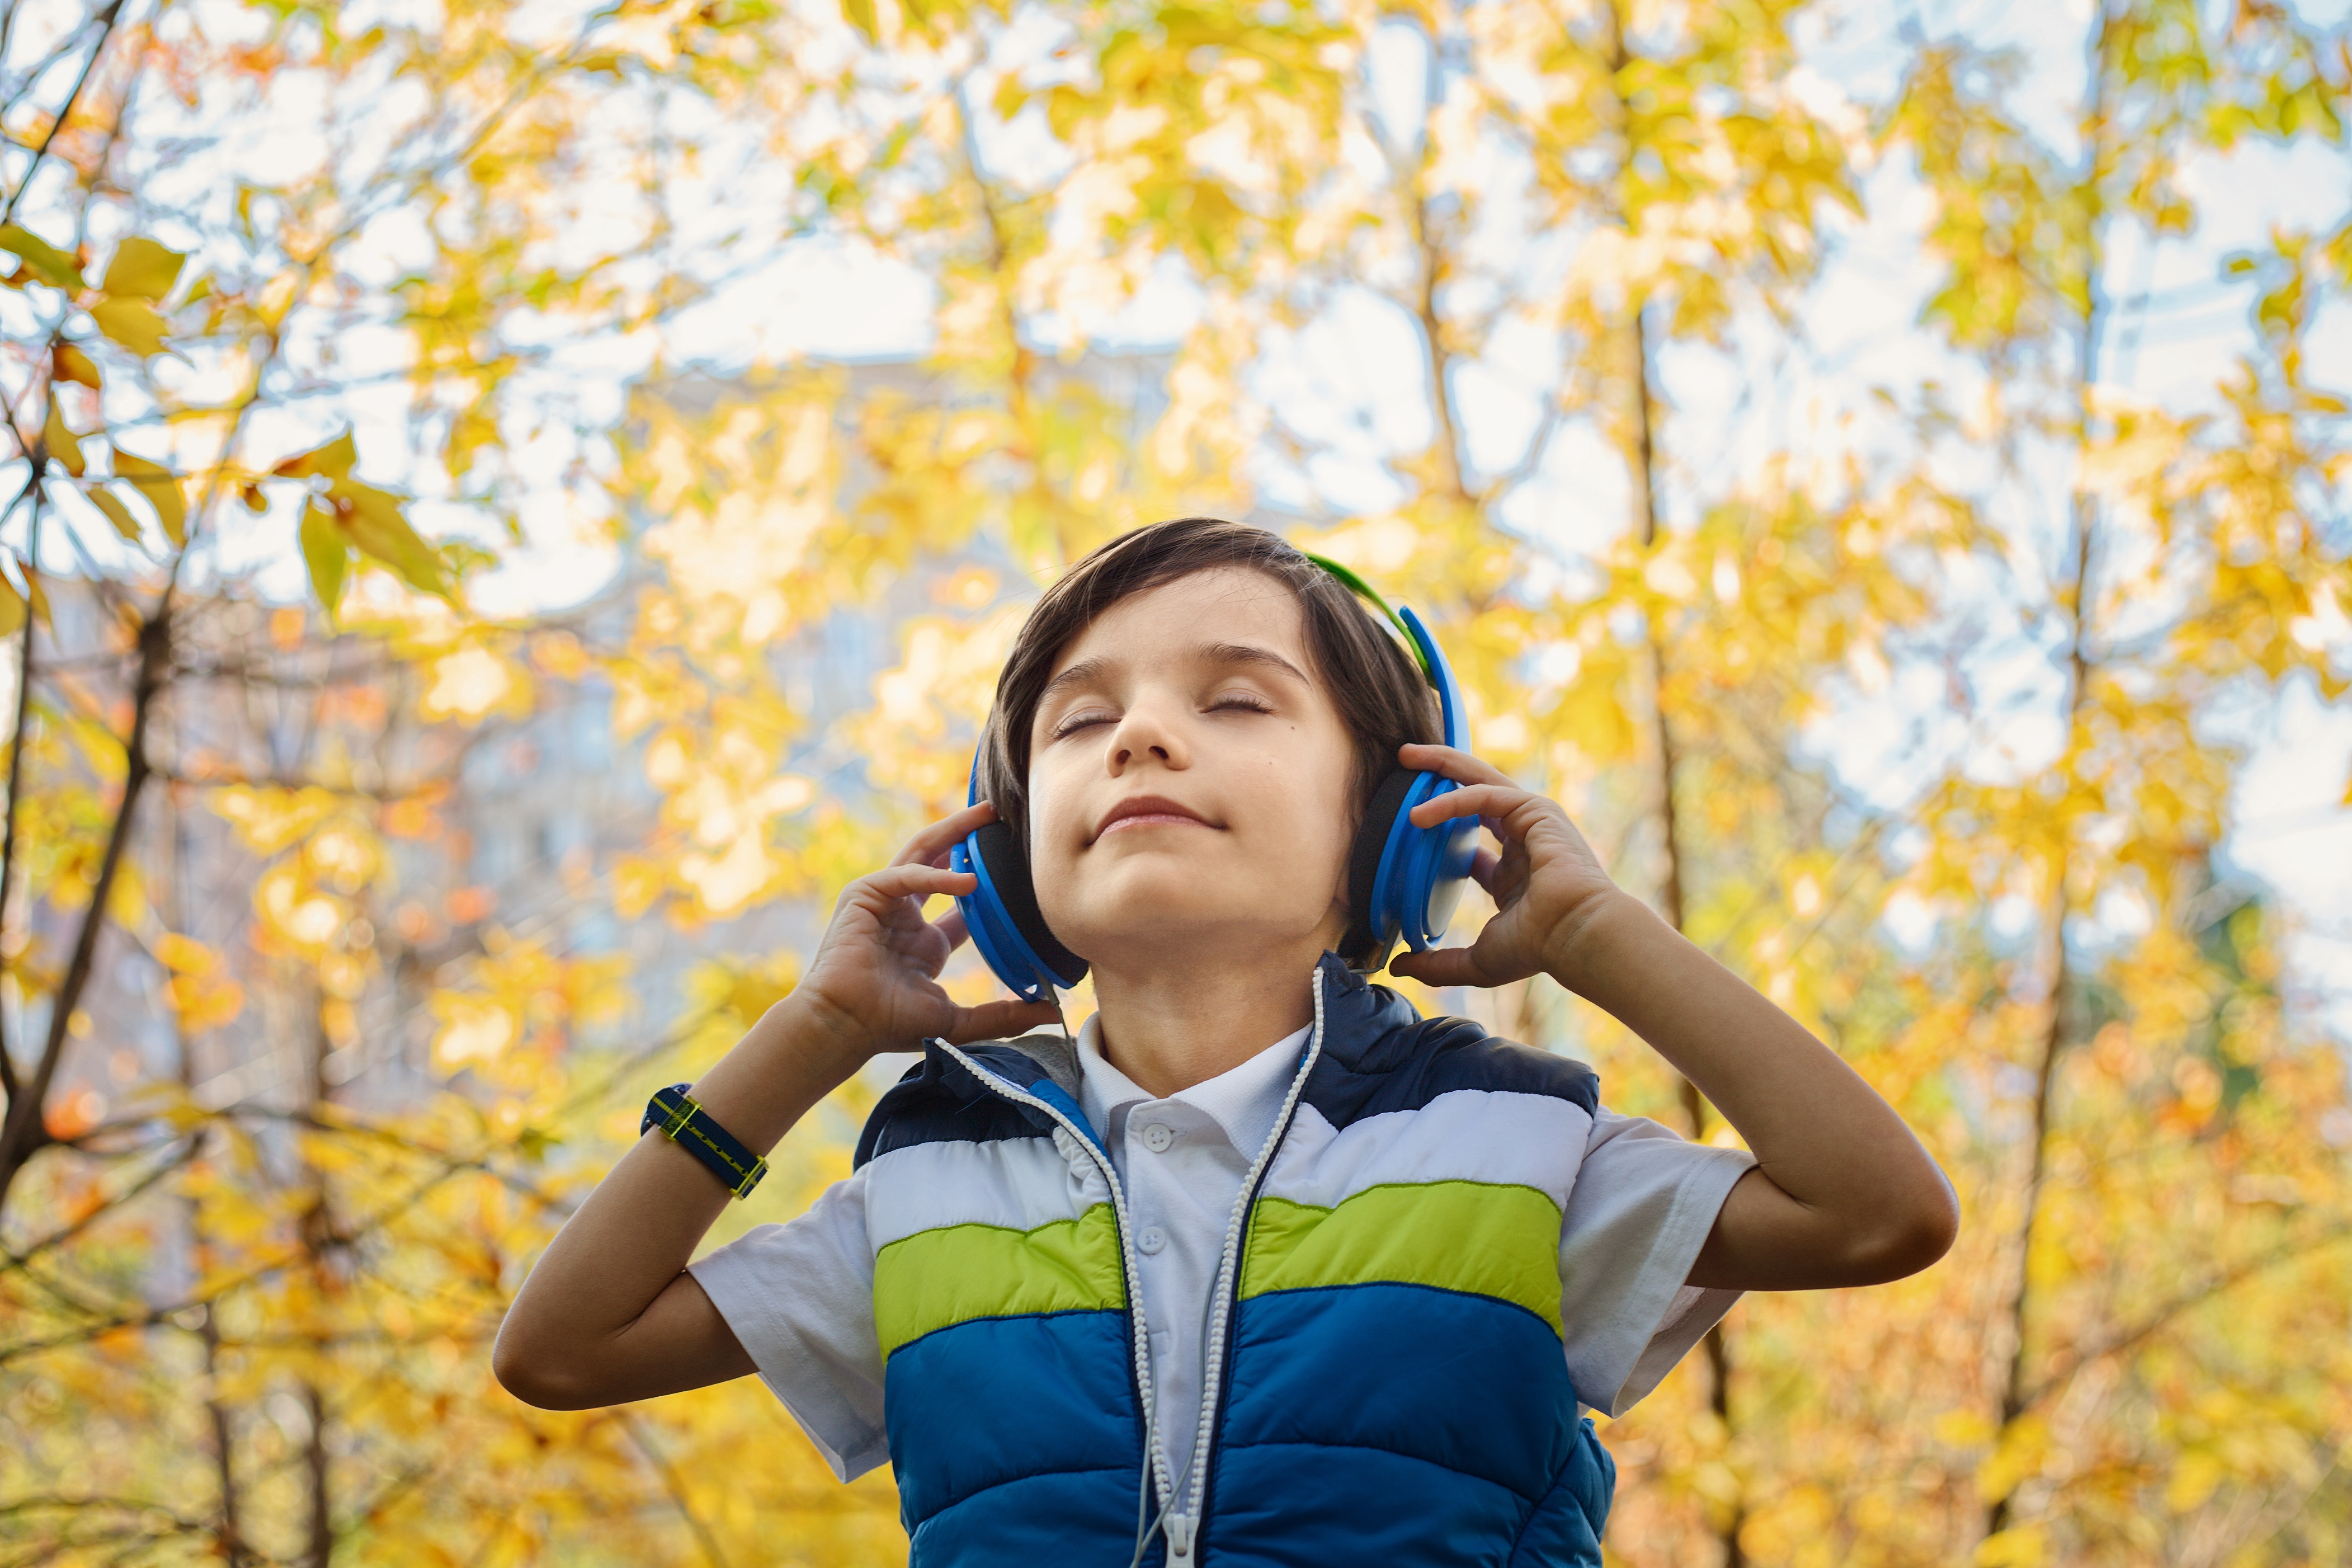 Preschool children can learn through music